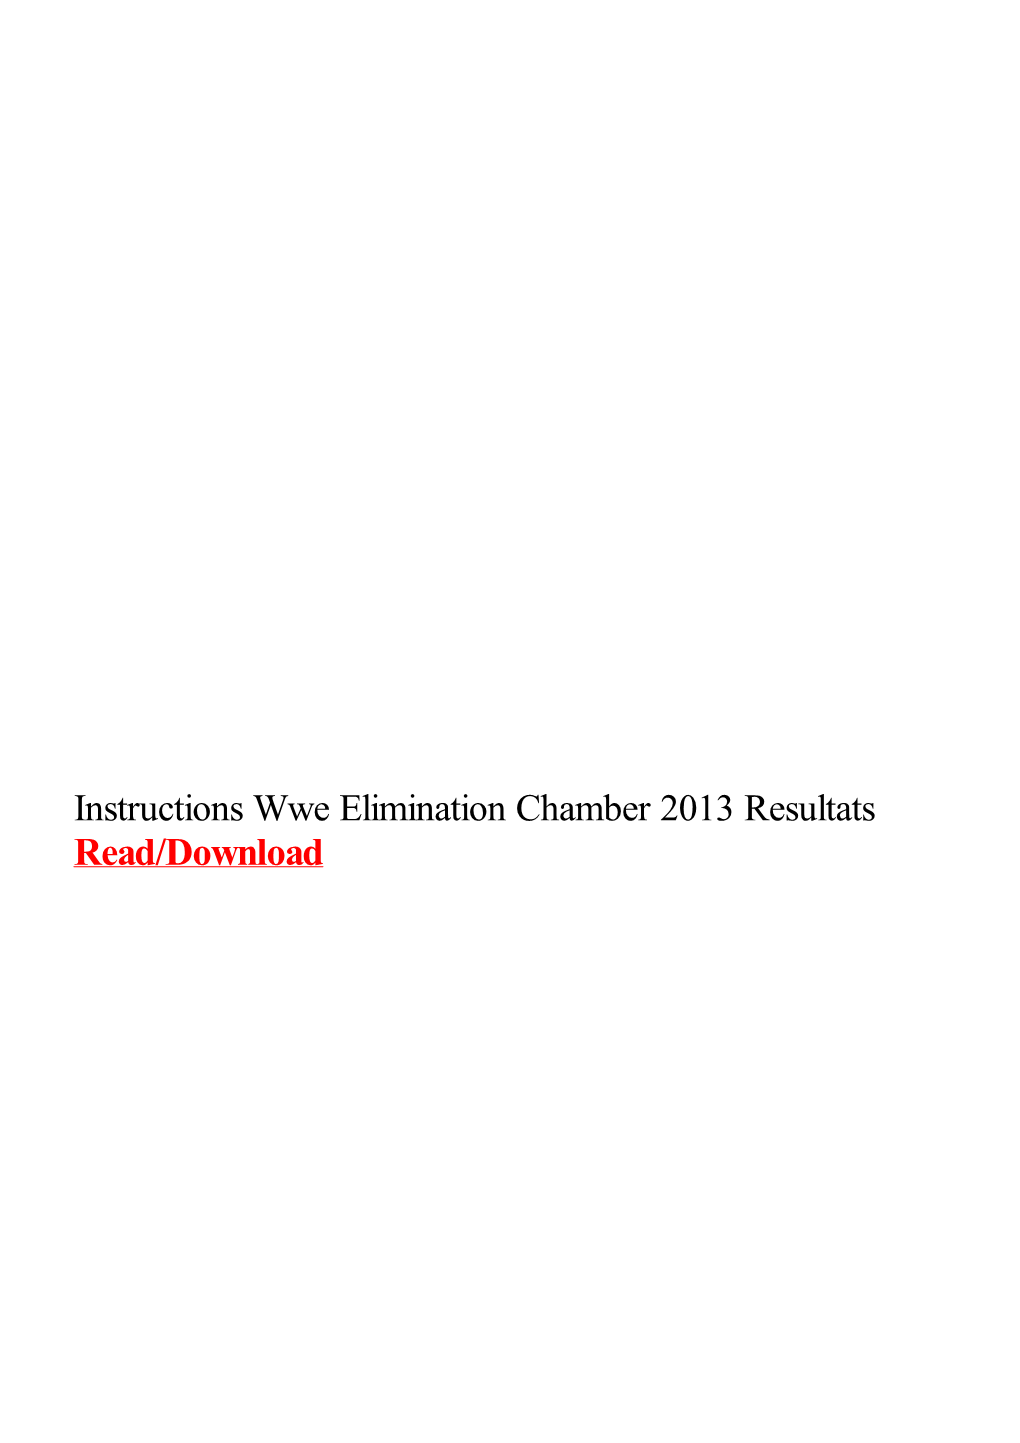 Instructions Wwe Elimination Chamber 2013 Resultats